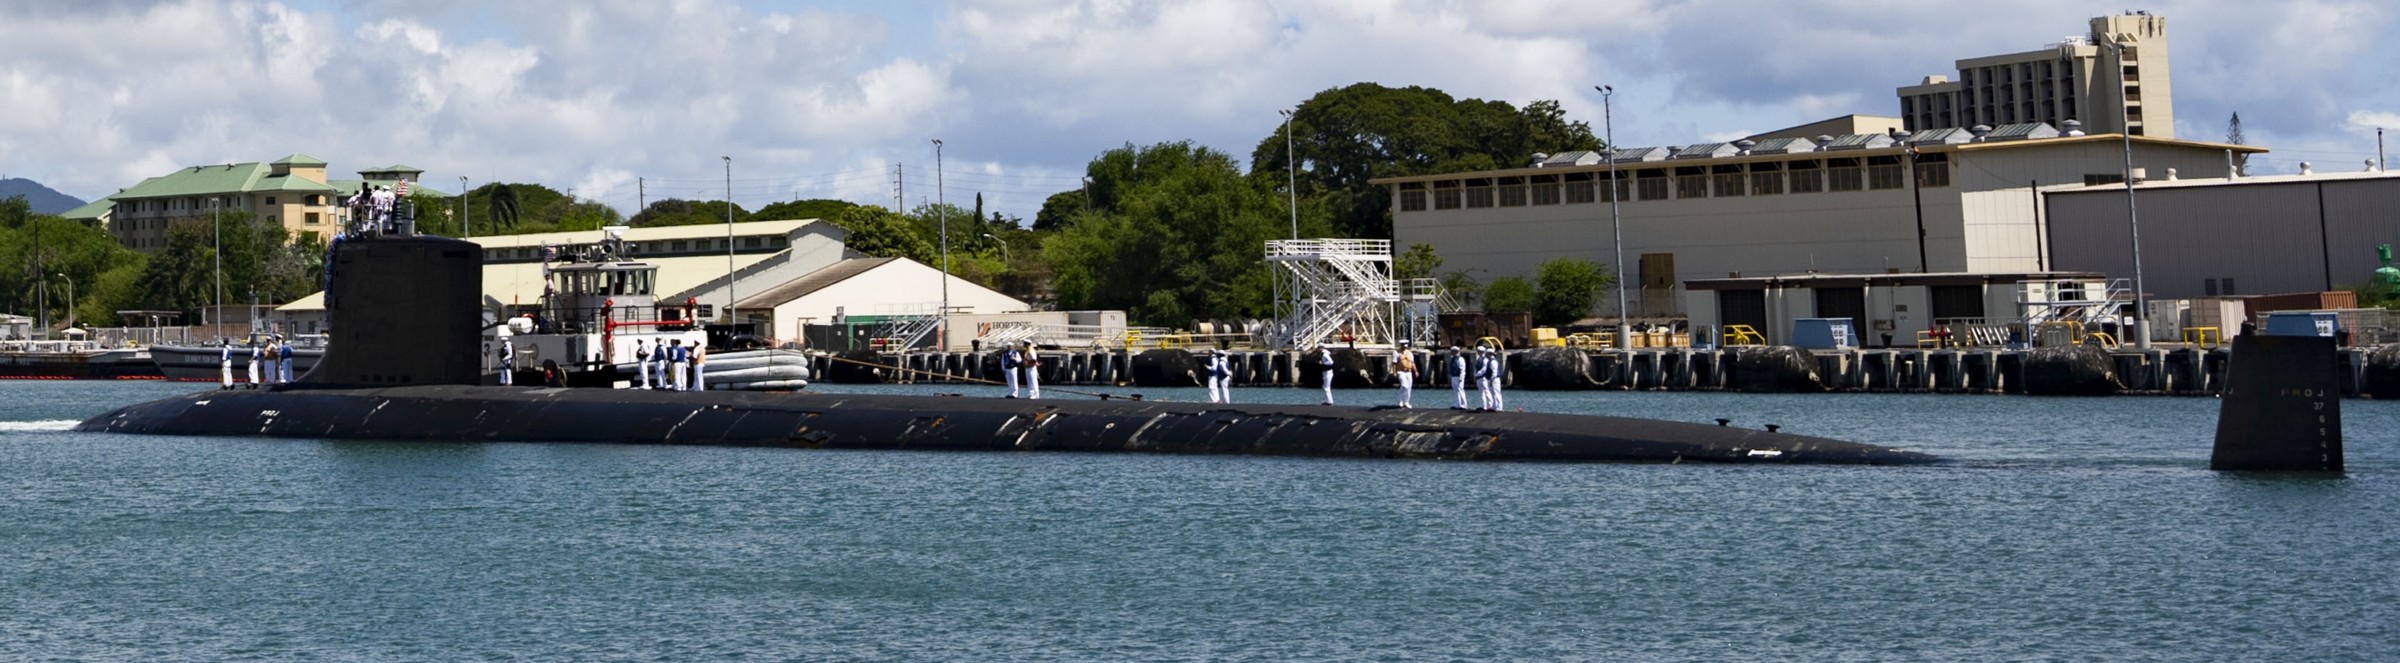 ssn-786 uss illinois virginia class attack submarine us navy 37 returning pearl harbor hickam hawaii